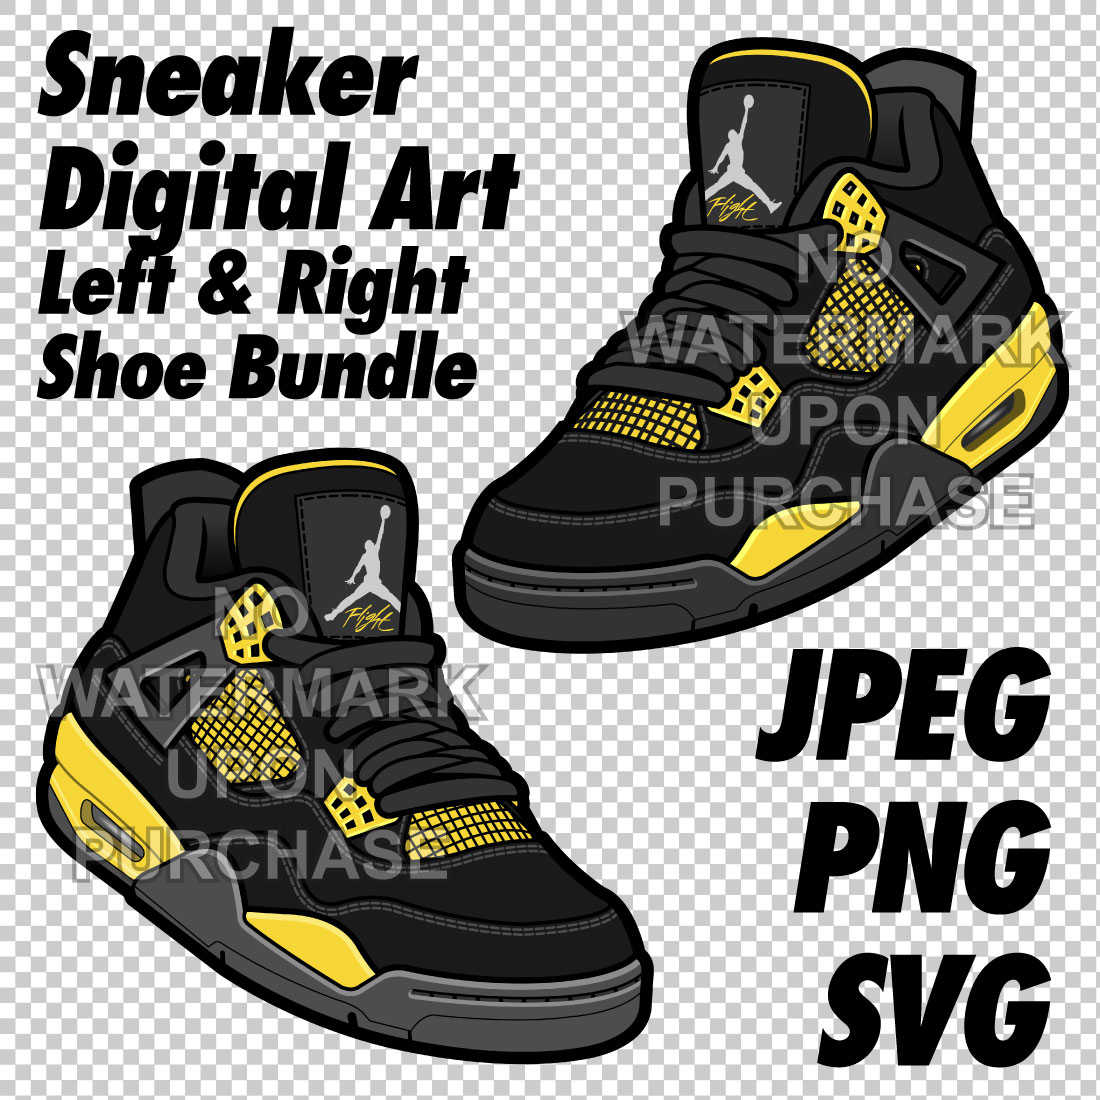 Air Jordan 4 Thunder JPEG PNG SVG Sneaker Art right & left shoe bundle cover image.